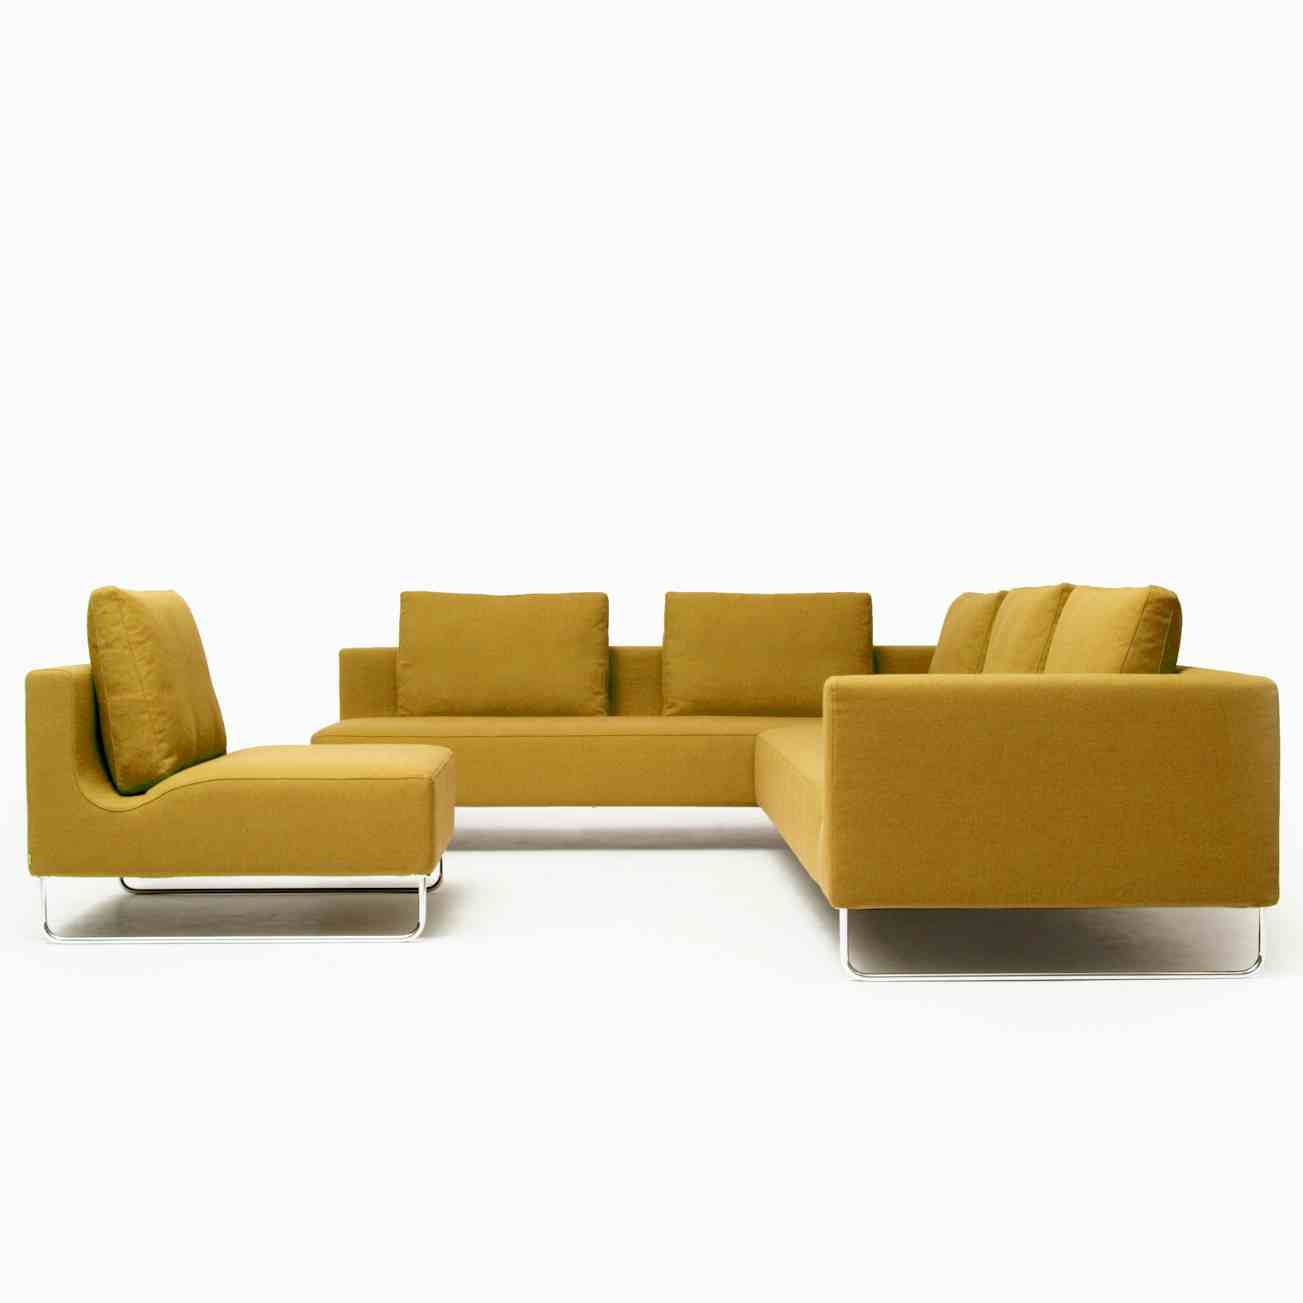 Bensen furniture canyon sofa yellow haute living